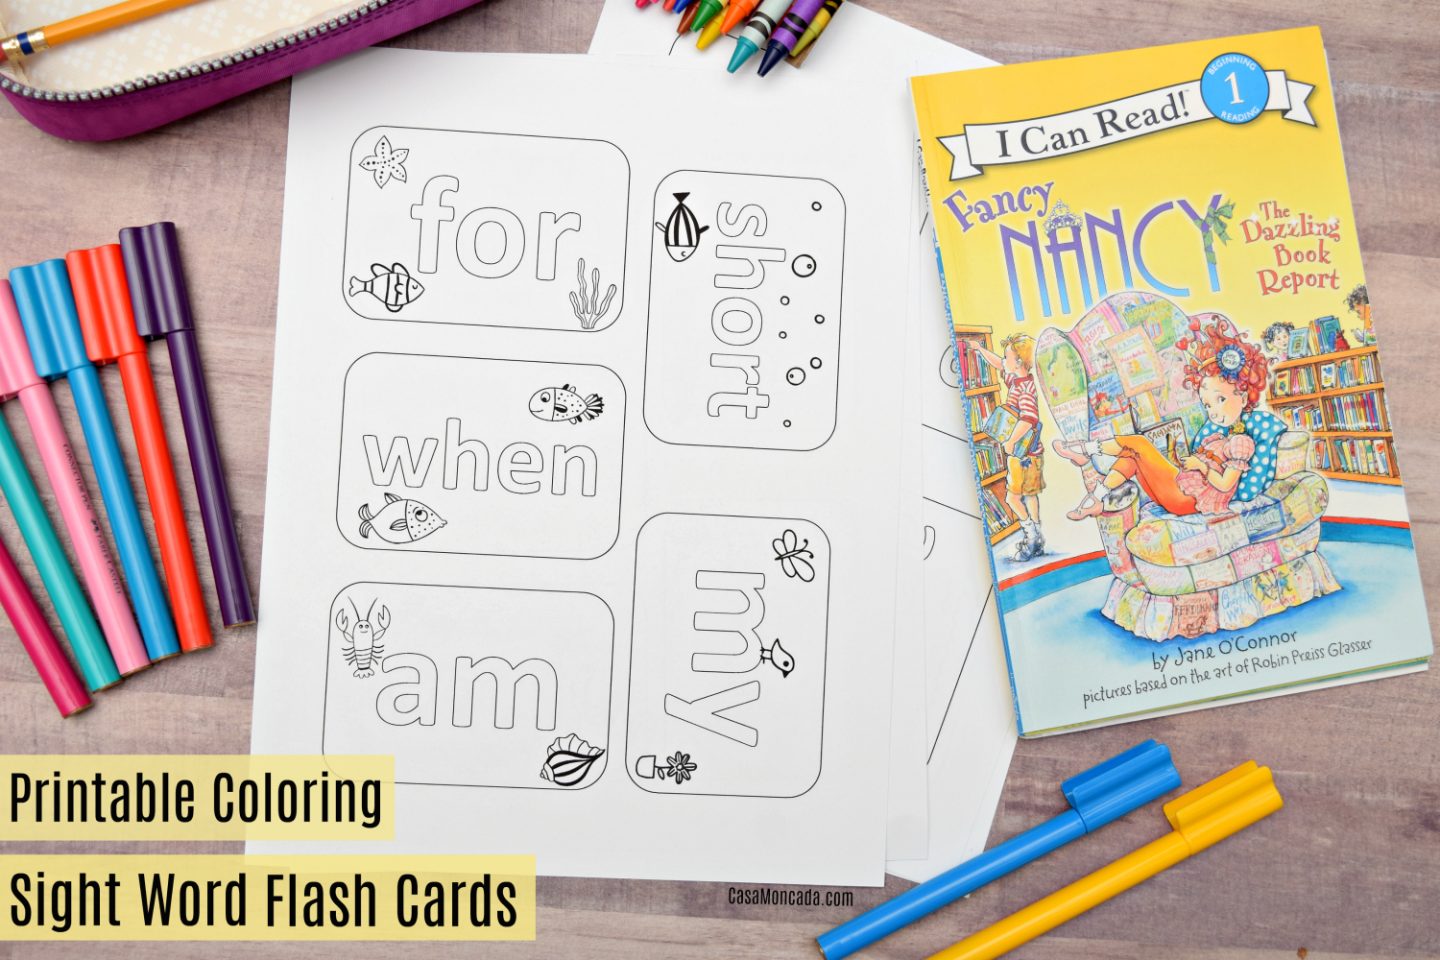 Printable Coloring Sight Words Flash Cards Sprinklediy